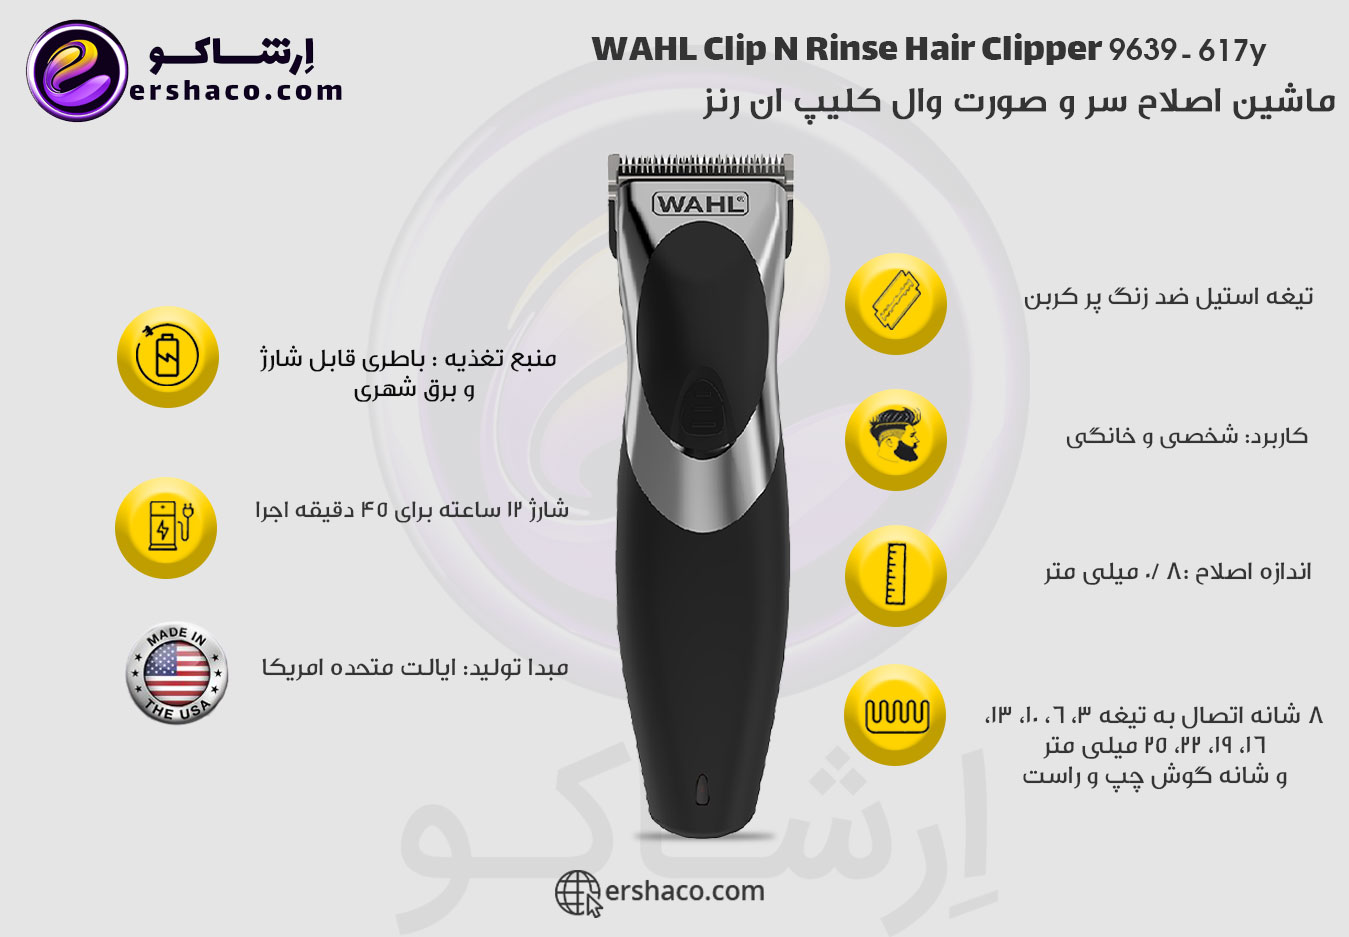 Wahl-9639-617y-Clip-N-Rinse-Hair-Clipper.jpg